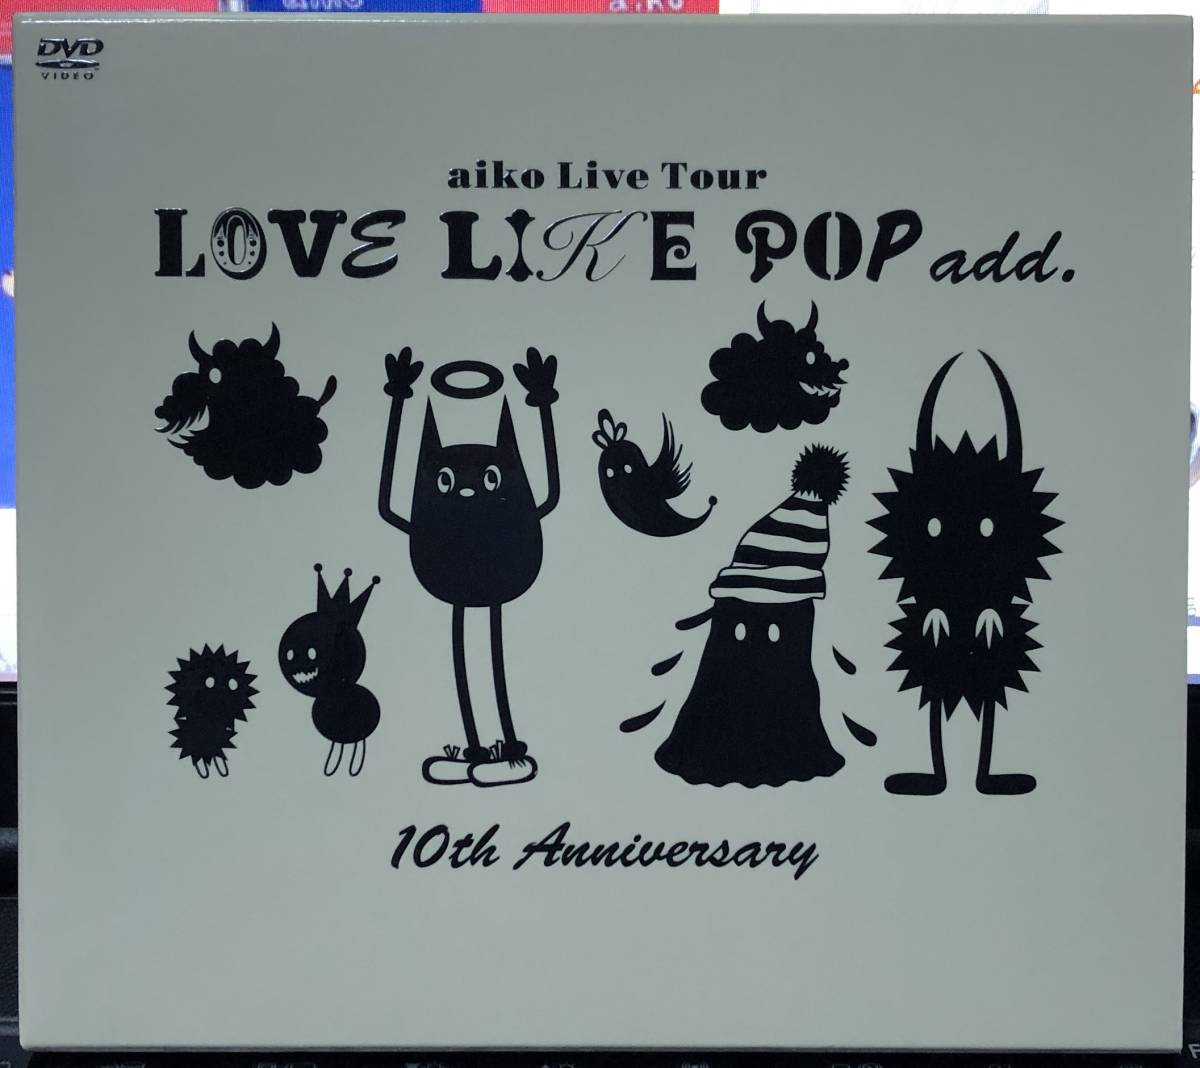 aiko LOVE LIKE POP & ウタウイヌ (2VCD) + aiko Live Tour LOVE LIKE POP add. (DVD)_画像4